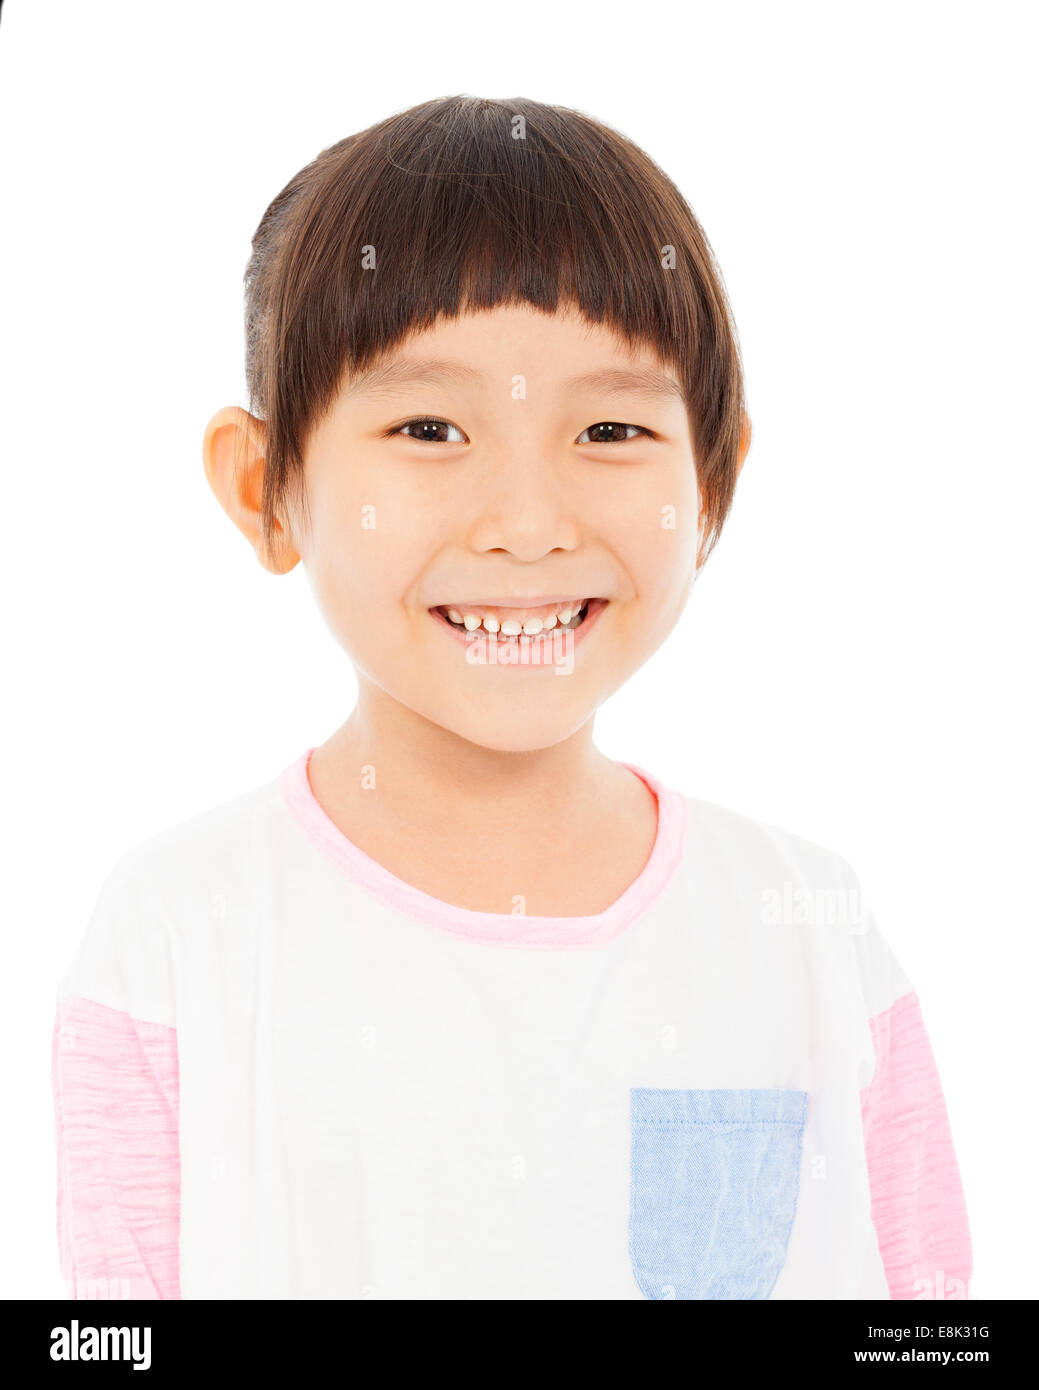 Primer plano de una niña feliz expresión facial sobre fondo blanco. Foto de stock